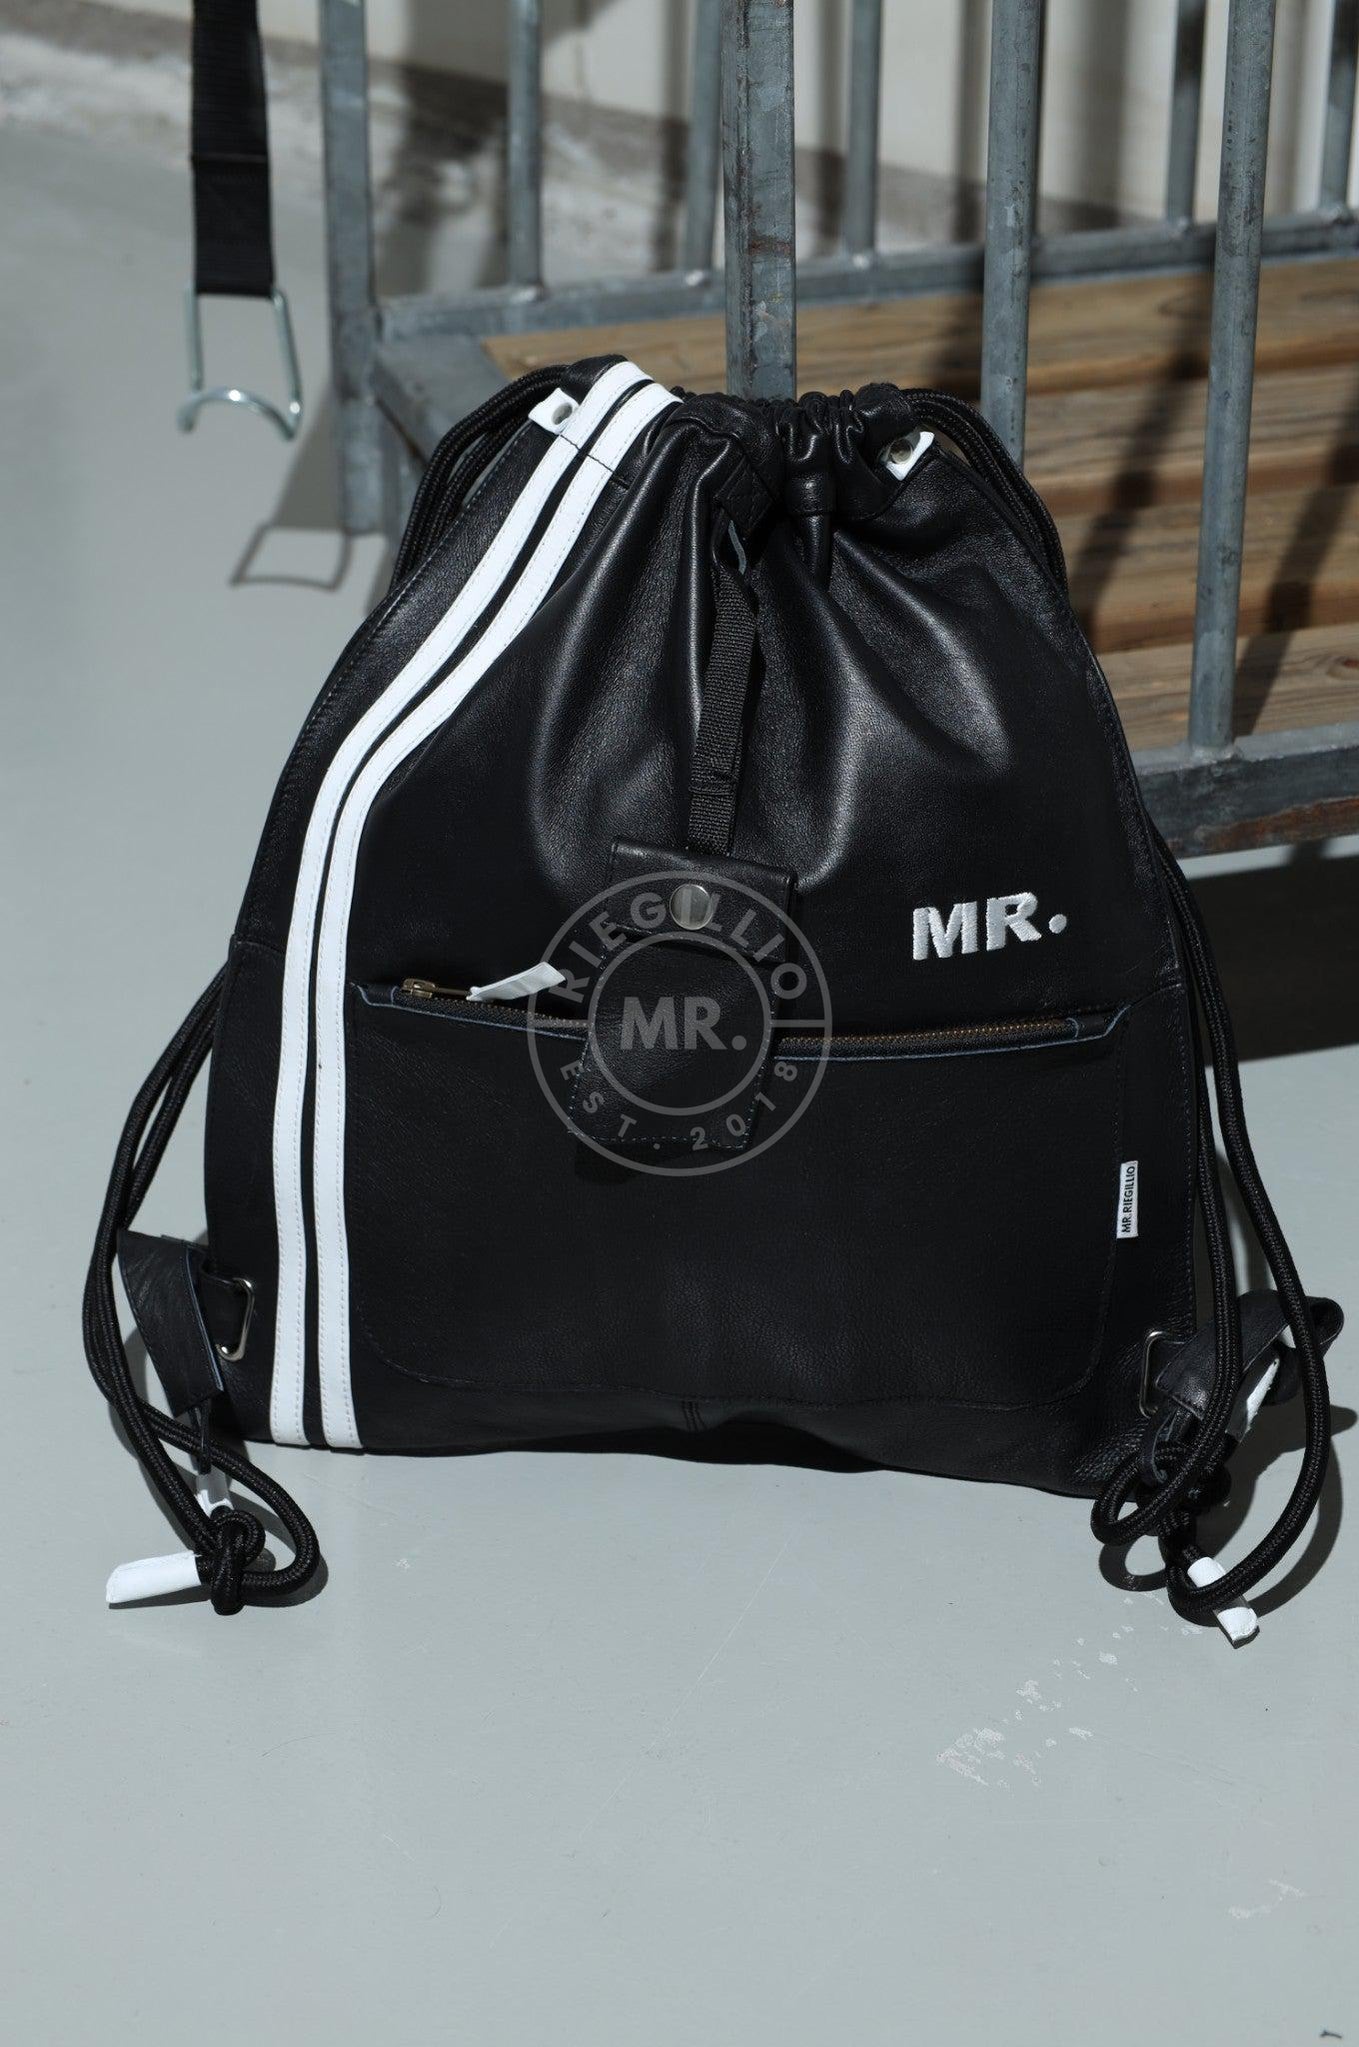 Leather Backpack Black - White Stripes-at MR. Riegillio